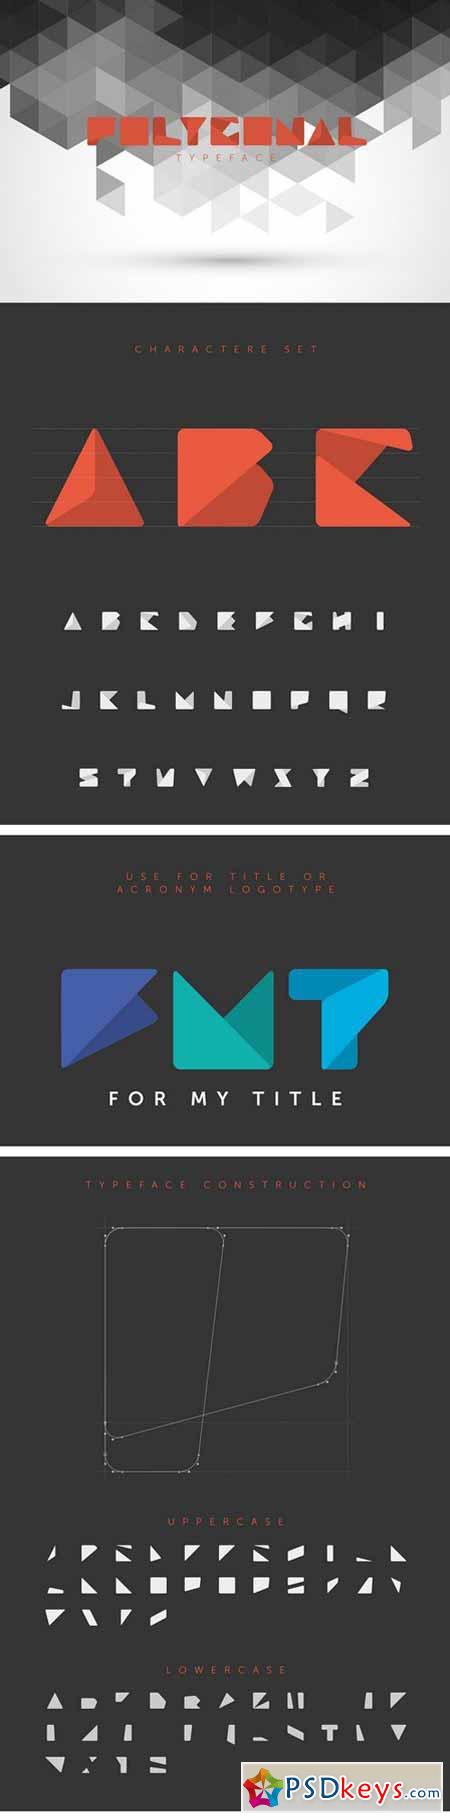 Polygonal typeface